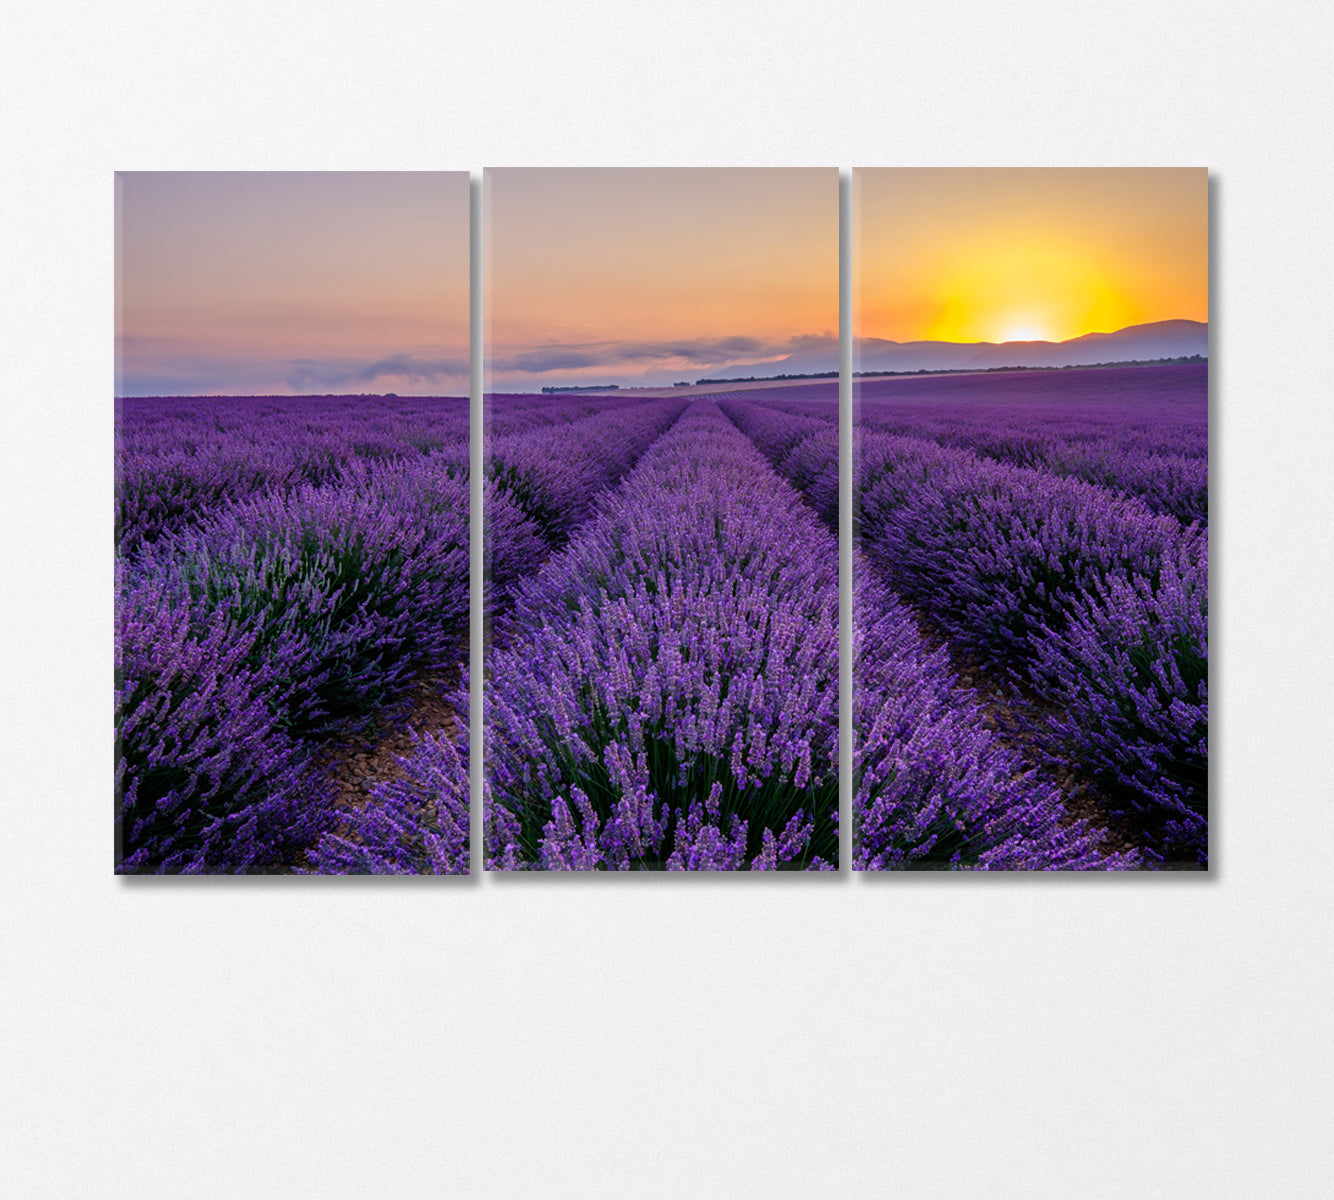 Sunrise in the Lavender Field Canvas Print-Canvas Print-CetArt-3 Panels-36x24 inches-CetArt